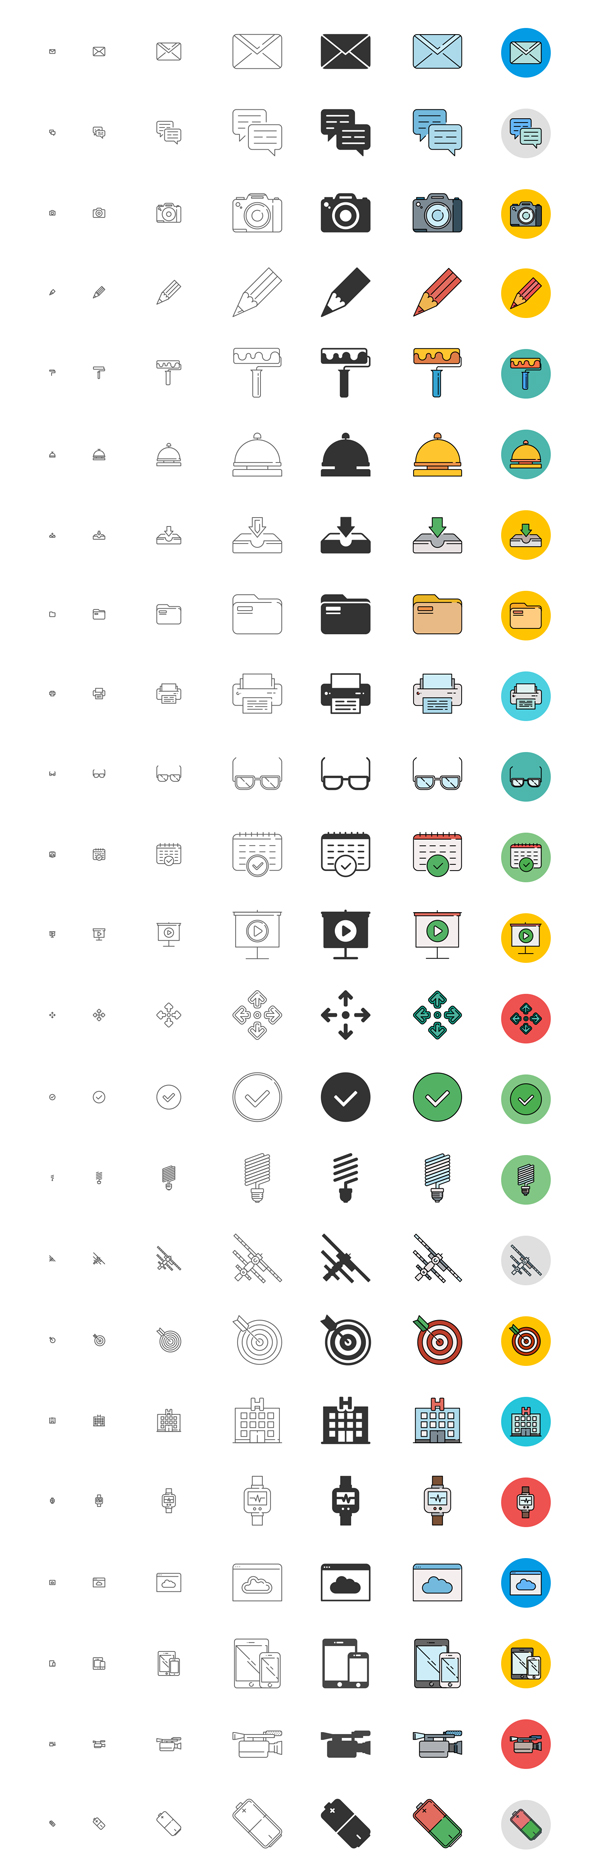 Free Responsive Icons Set - 192 Icons